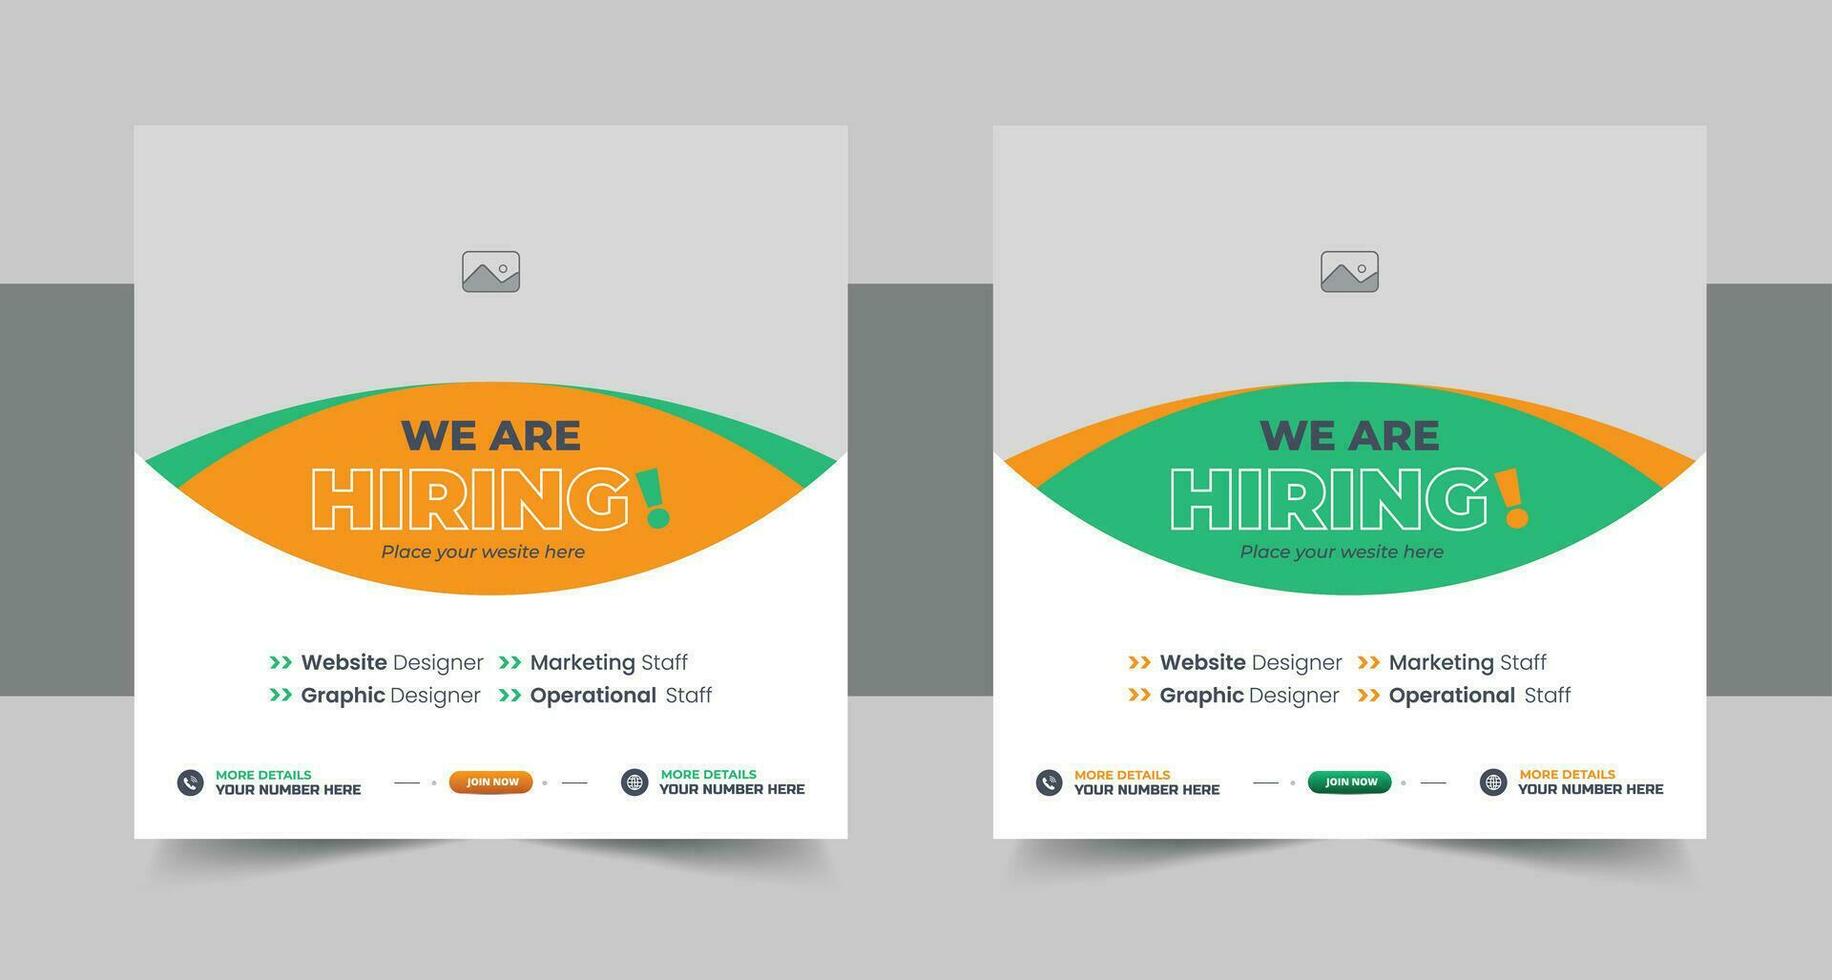 We are hiring job vacancy social media post or Social Media Banner design template, We are hiring job vacancy square web banner design layout vector